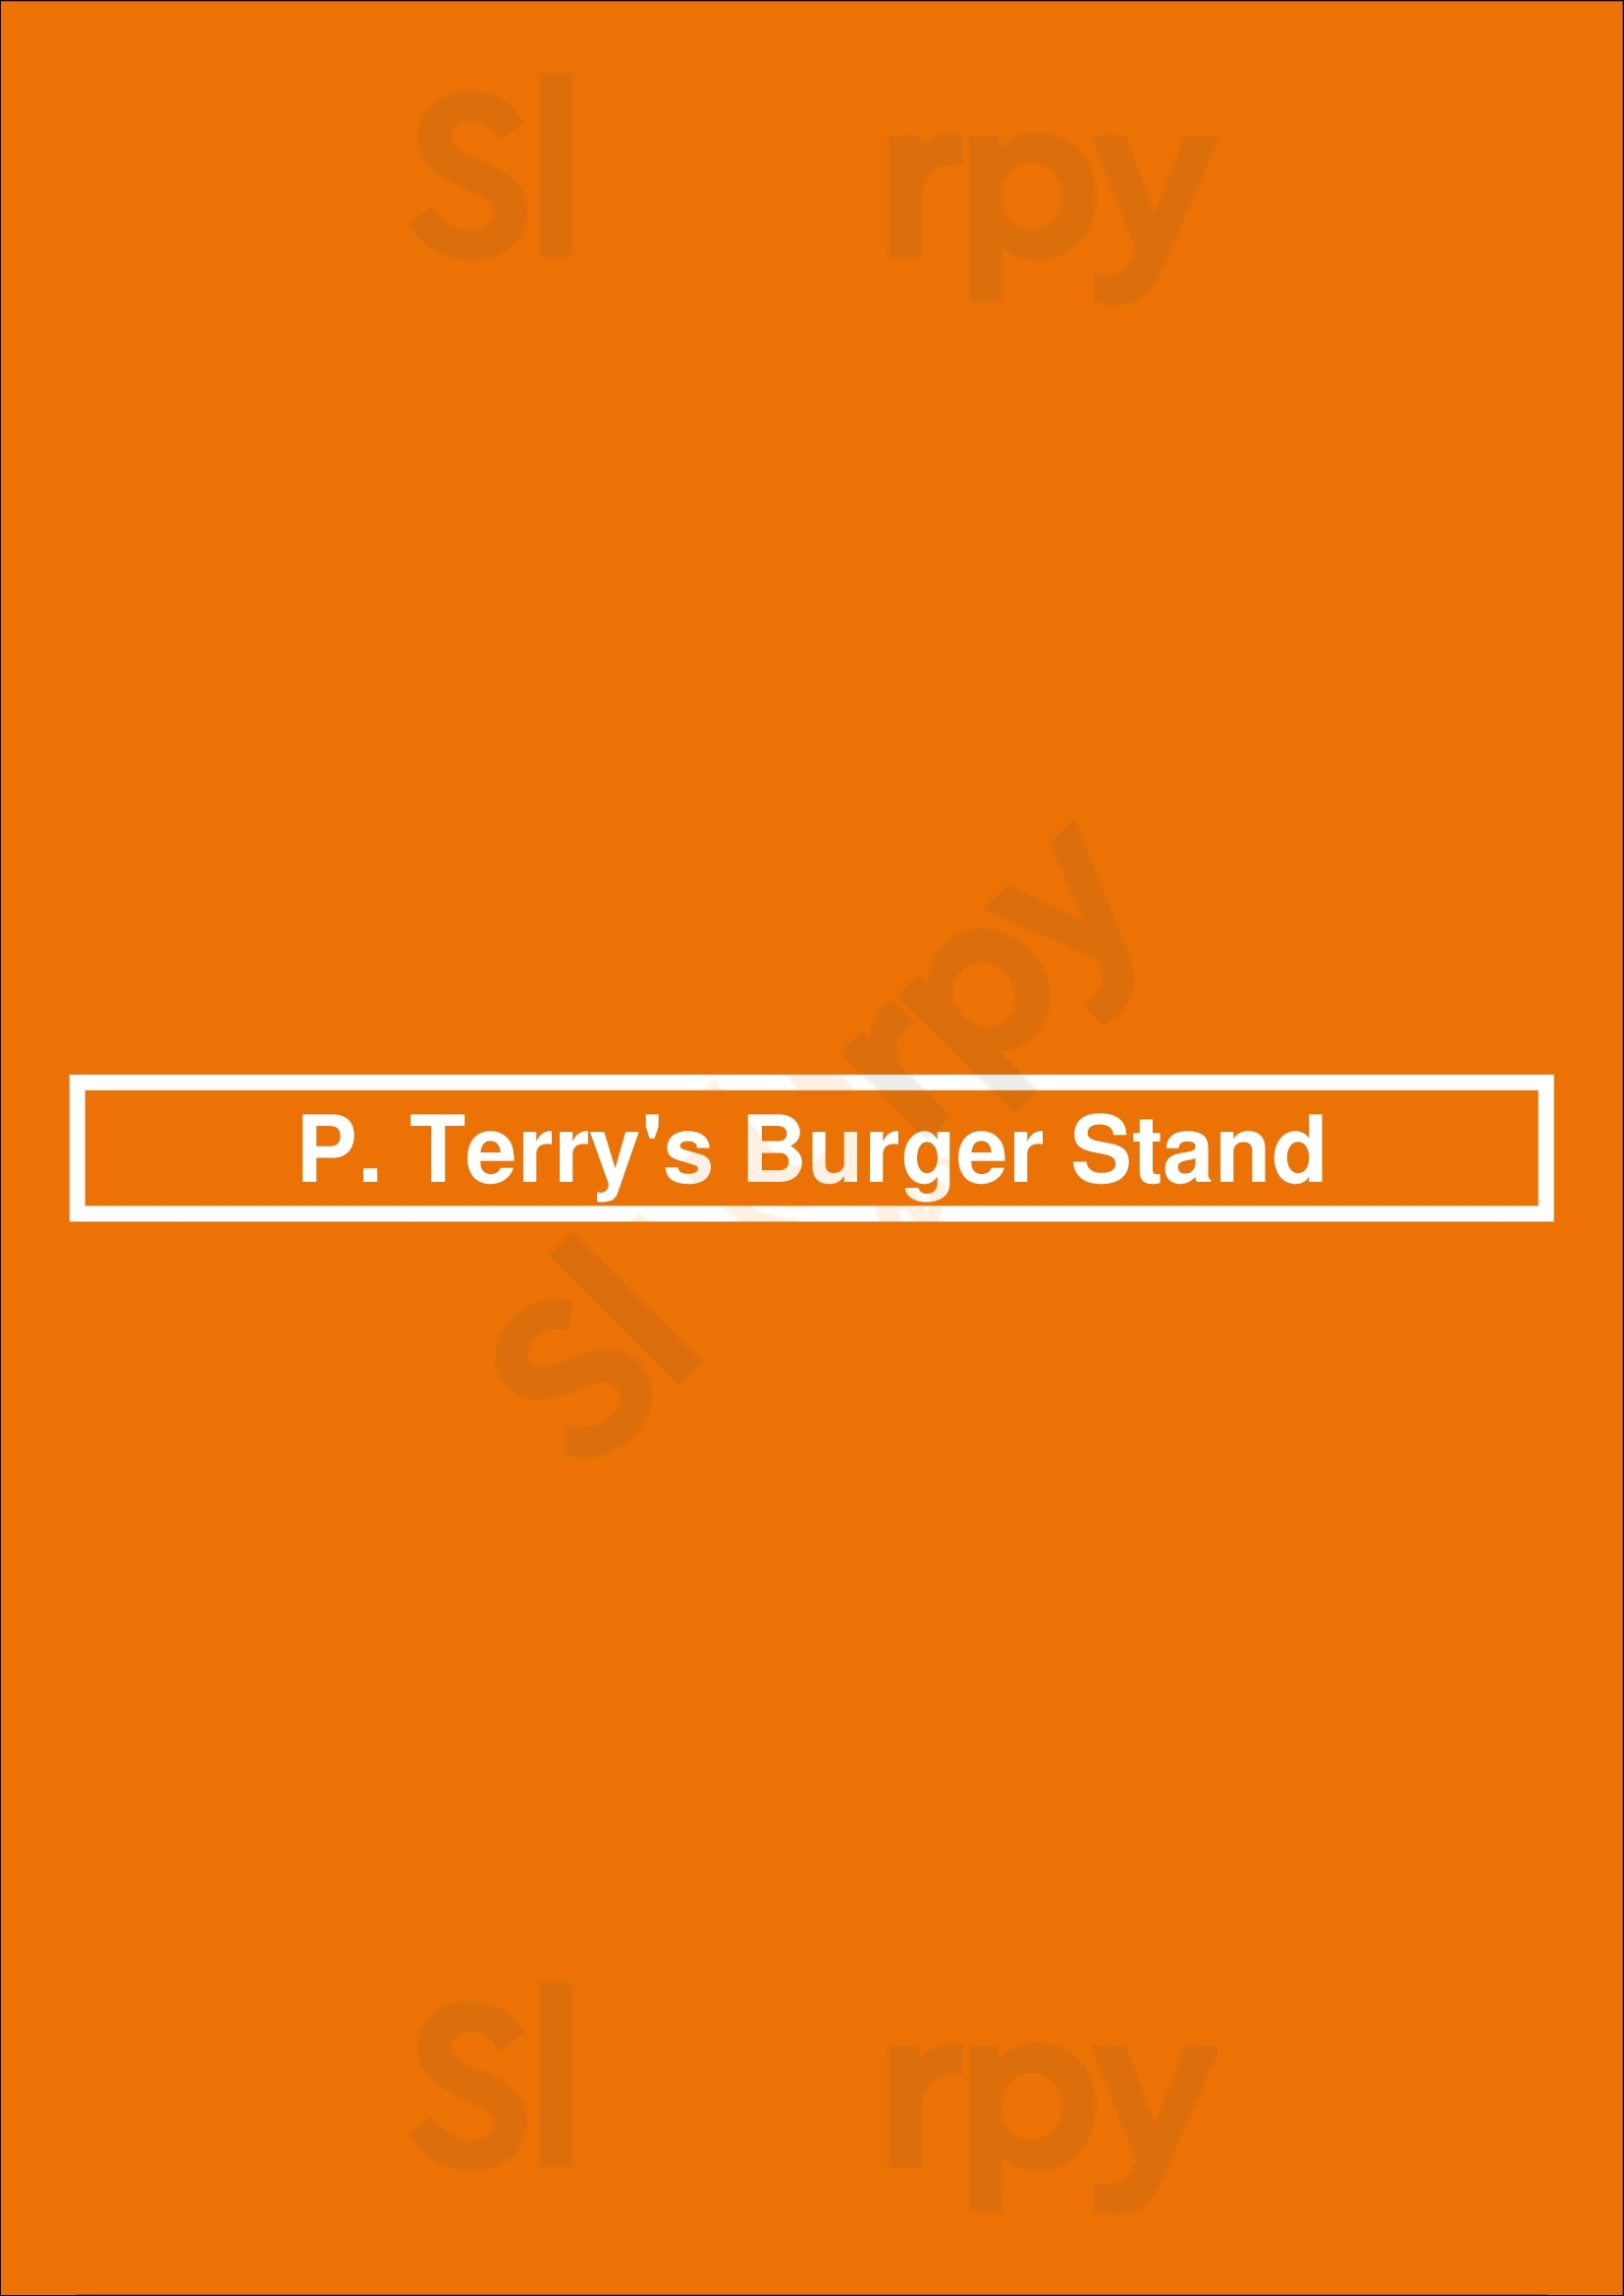 P. Terry's Burger Stand #3 Austin Menu - 1